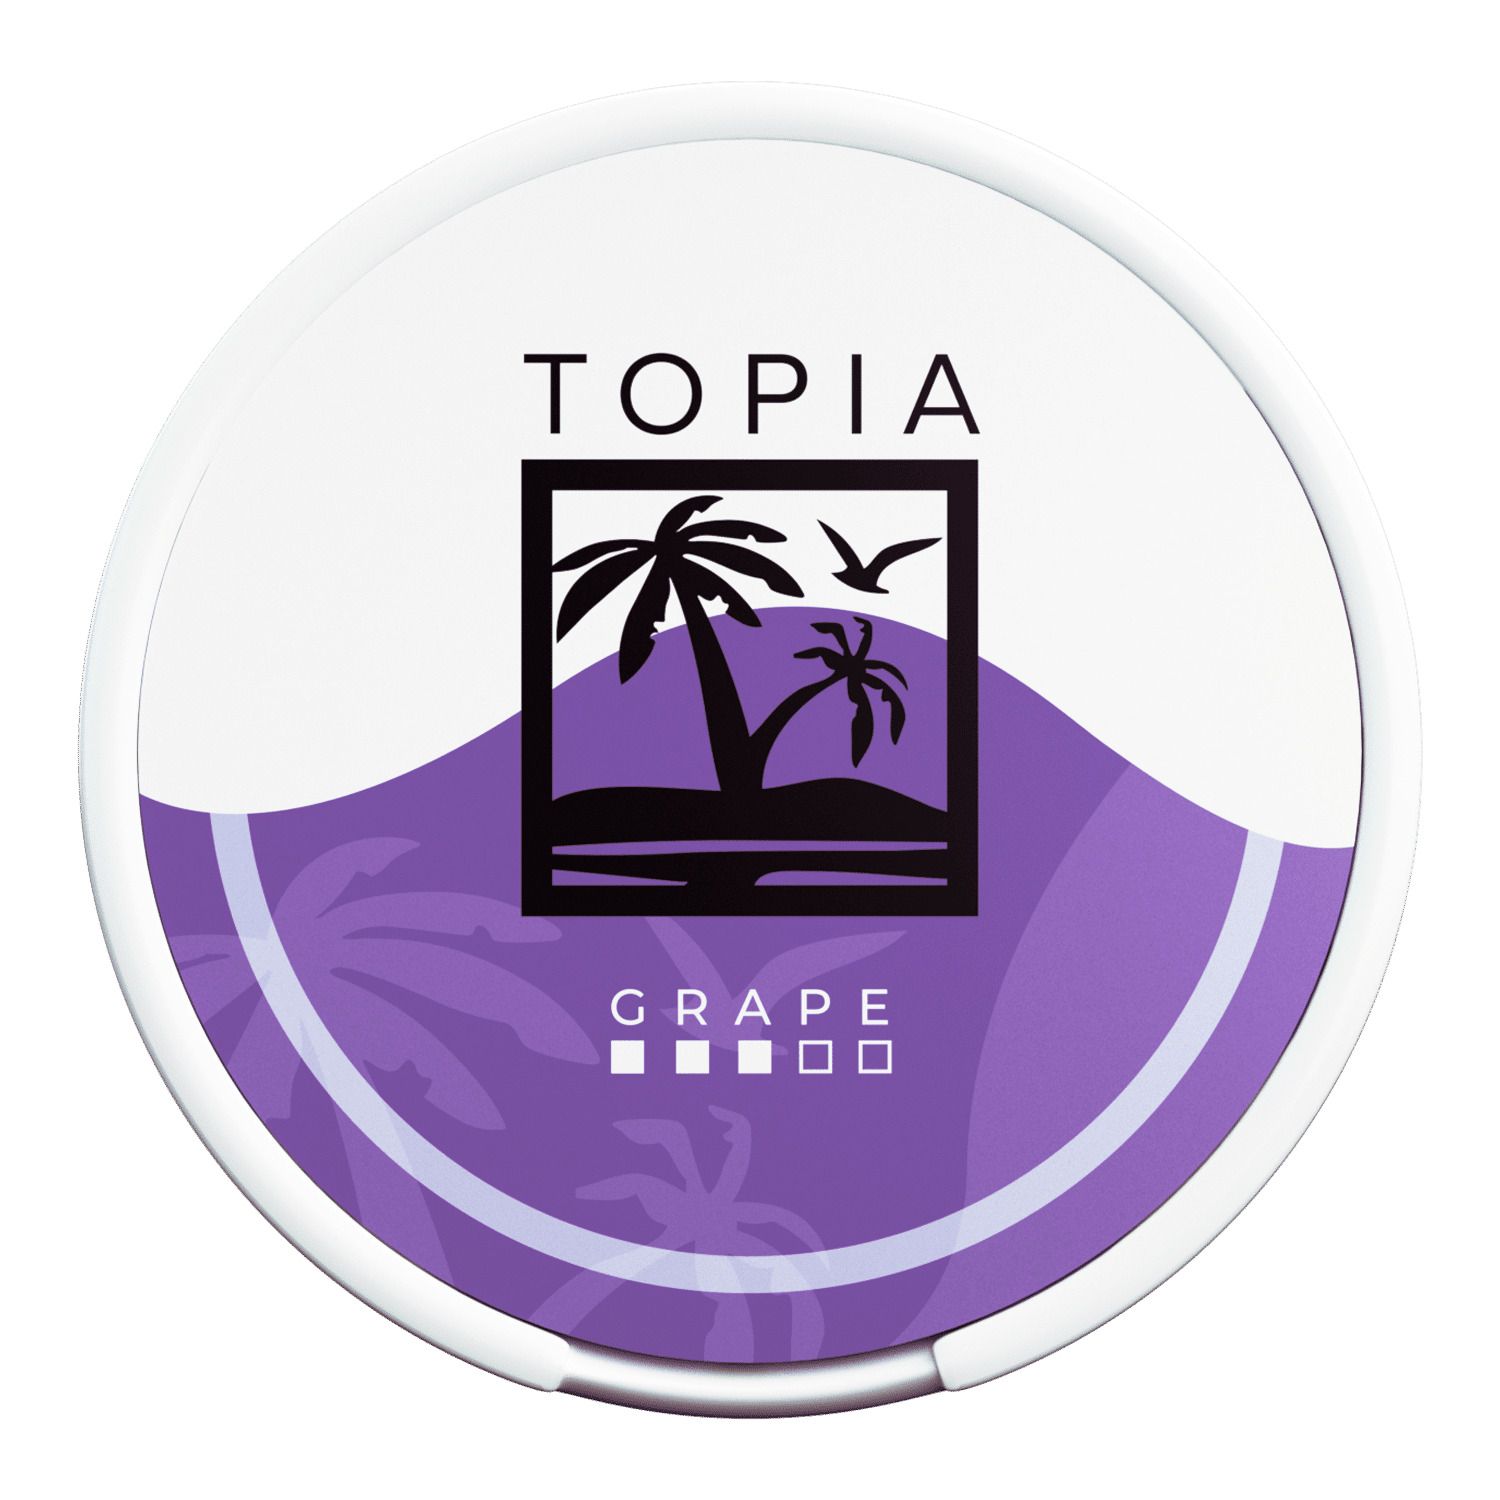 Topia Grape 6mg snus nicotine pouches the pod block new